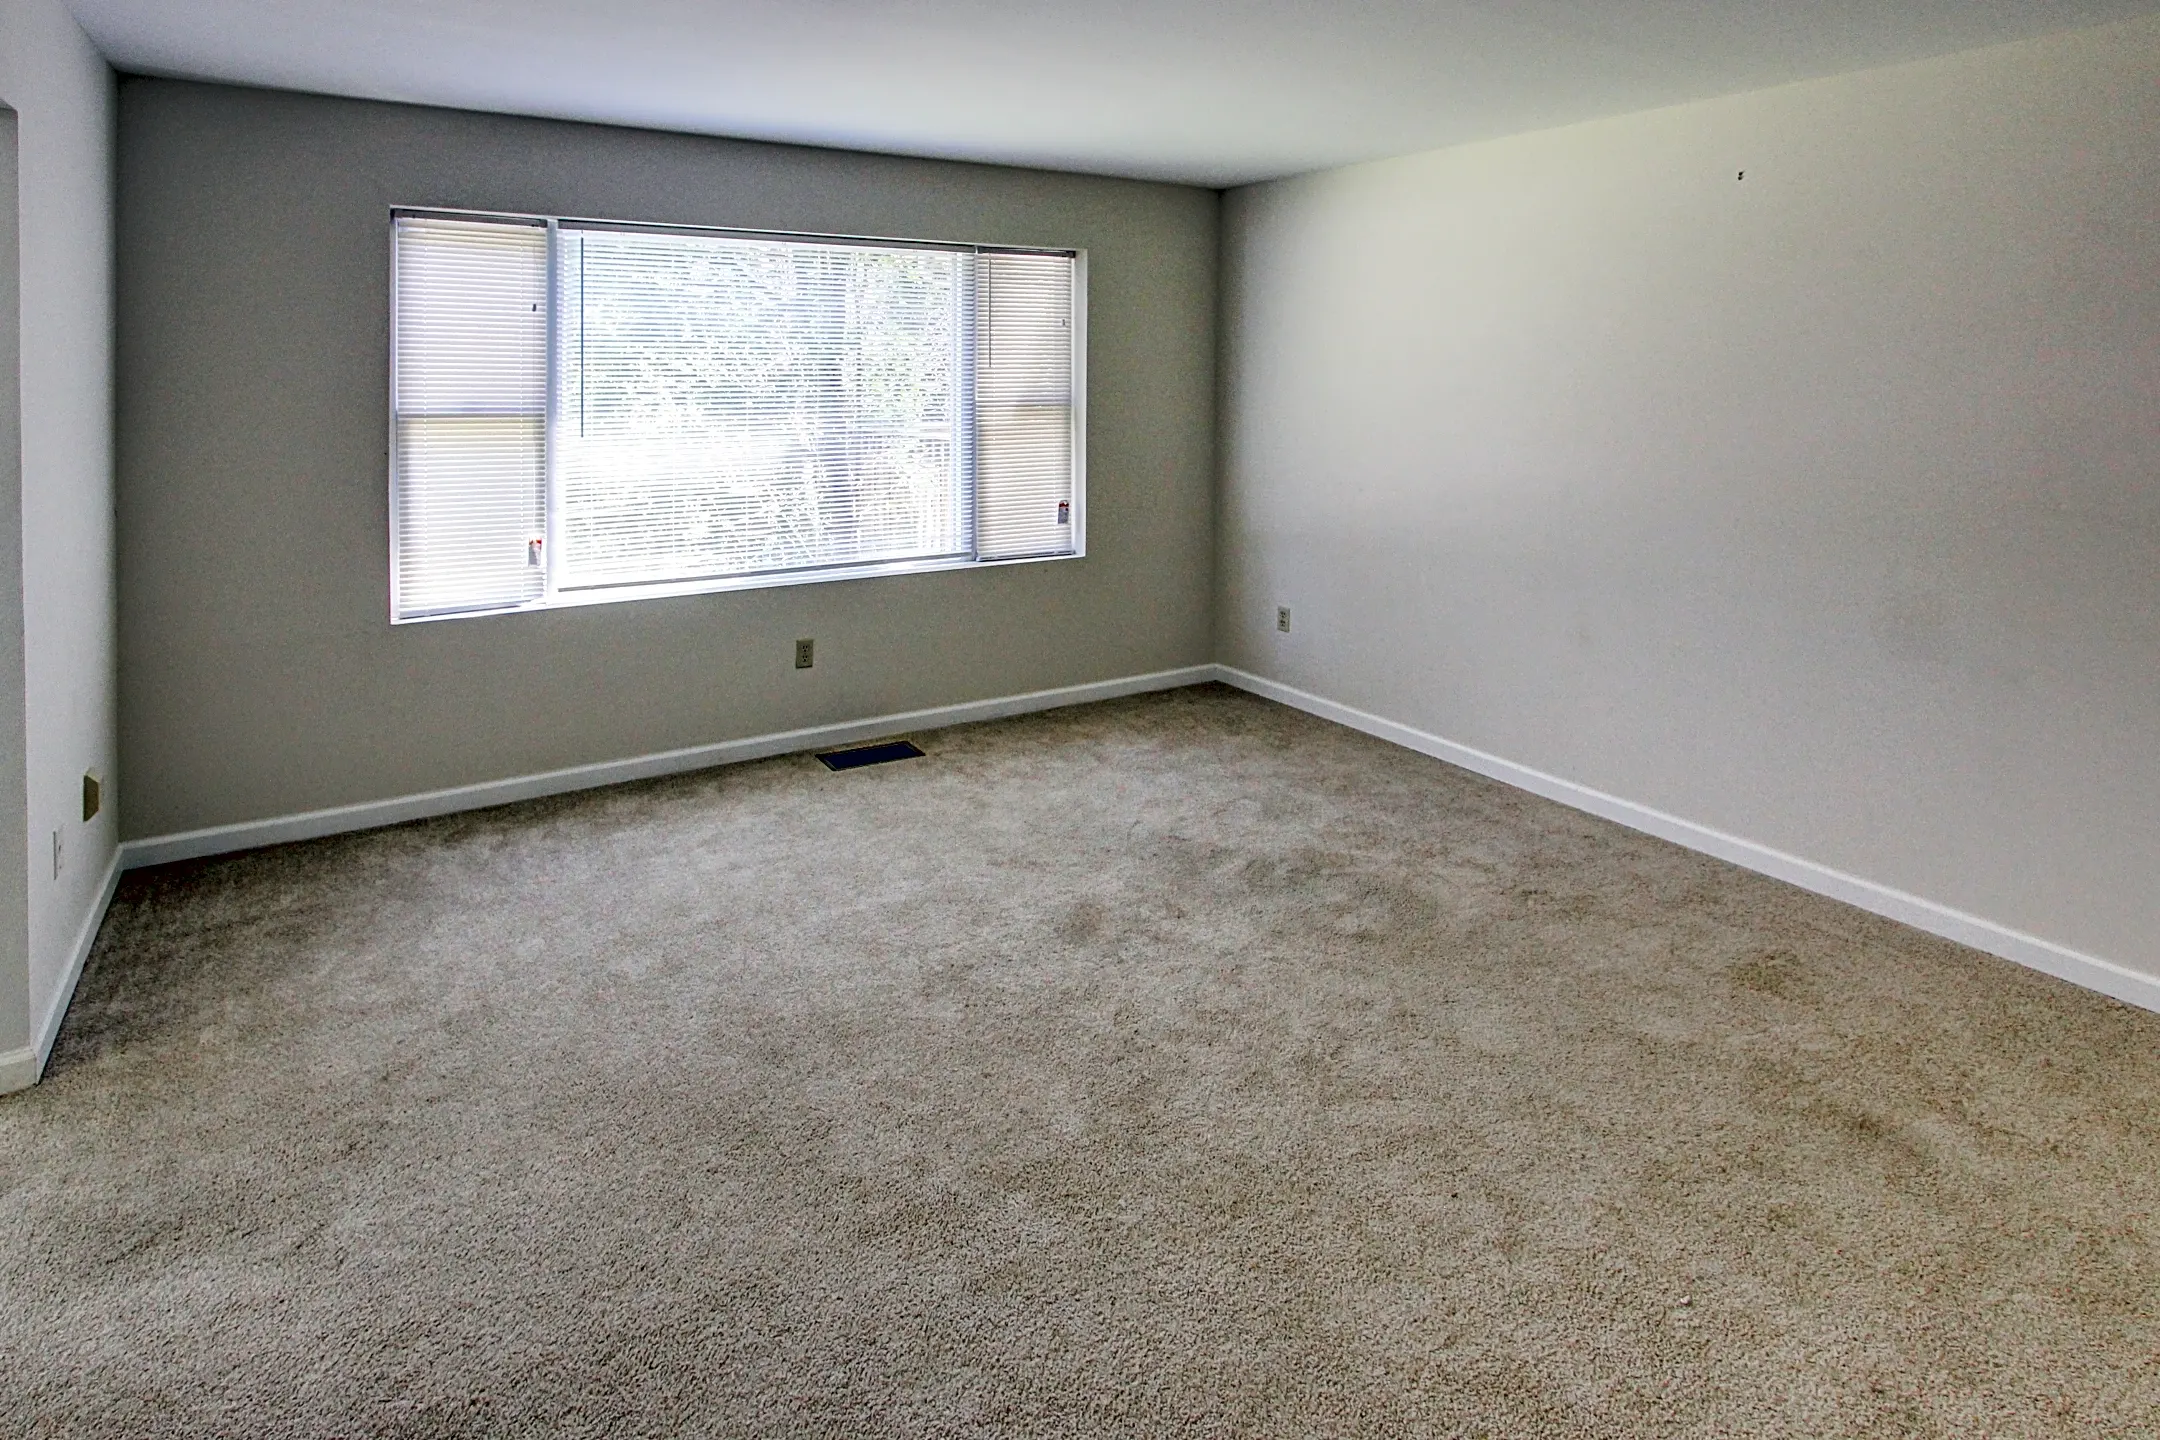 Living Room - Marshfield Apartments - North Branford, CT